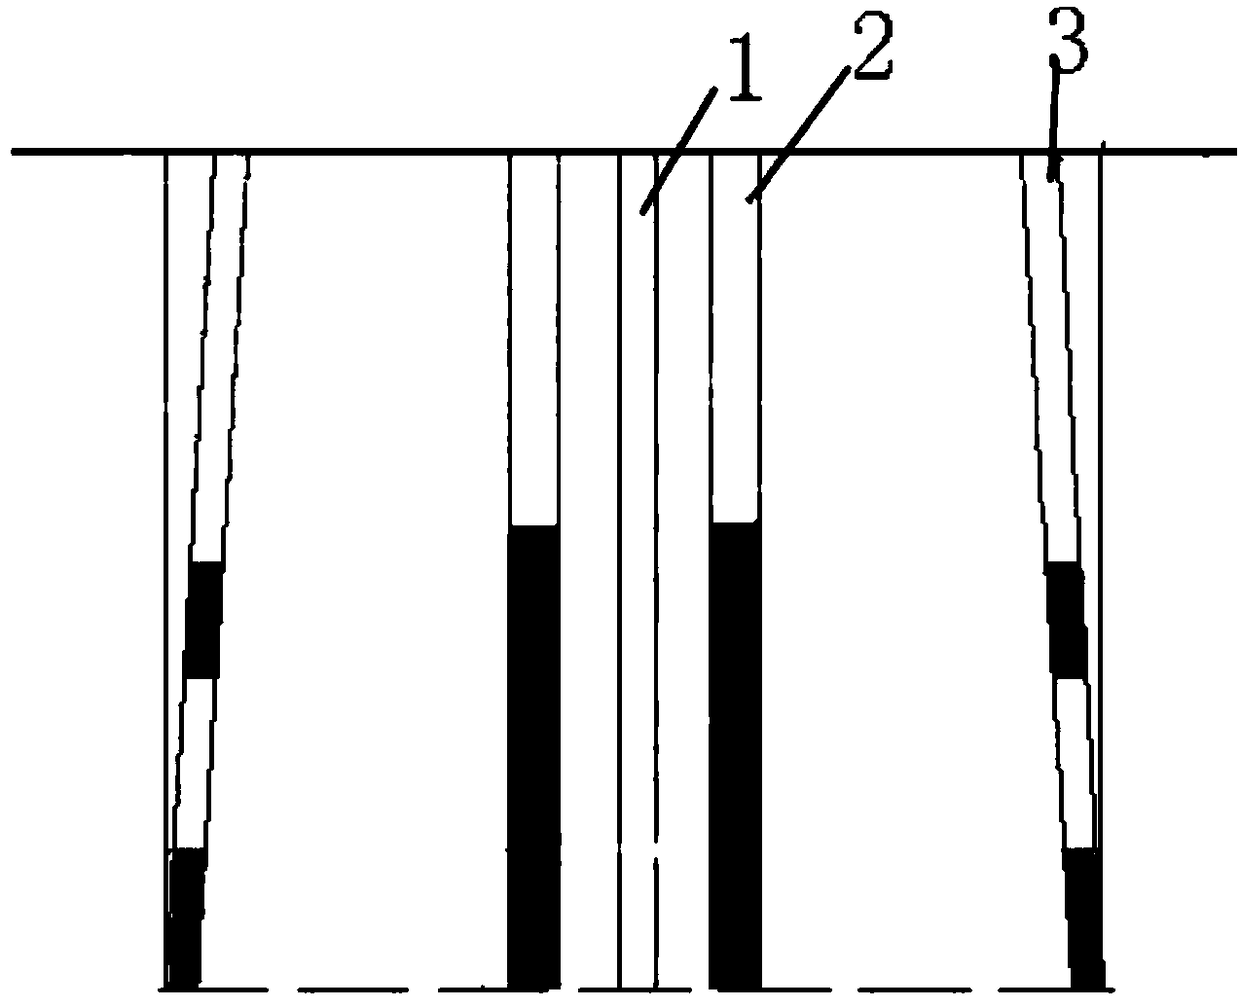 Blasting method for bridge cylindrical pile foundation with pile foundation diameter of 1.1-1.3m